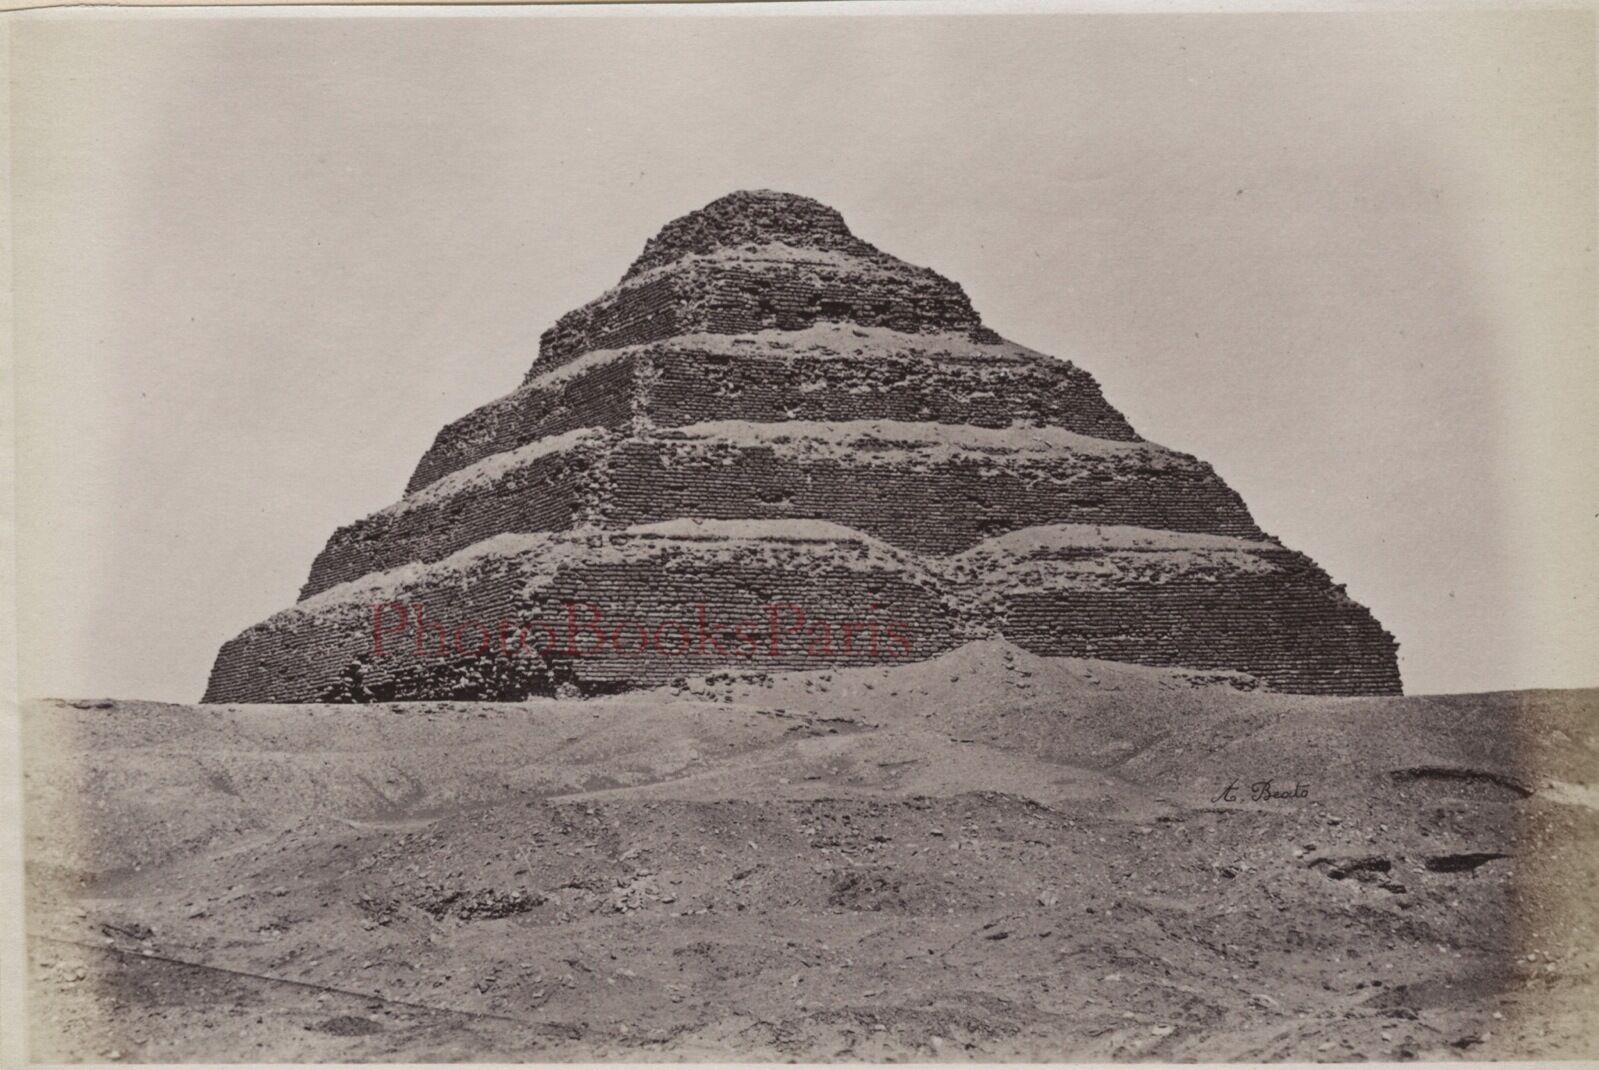 Egypt pyramid saqqara sakkarah photo albumen in small size 9x13cm ca 1880